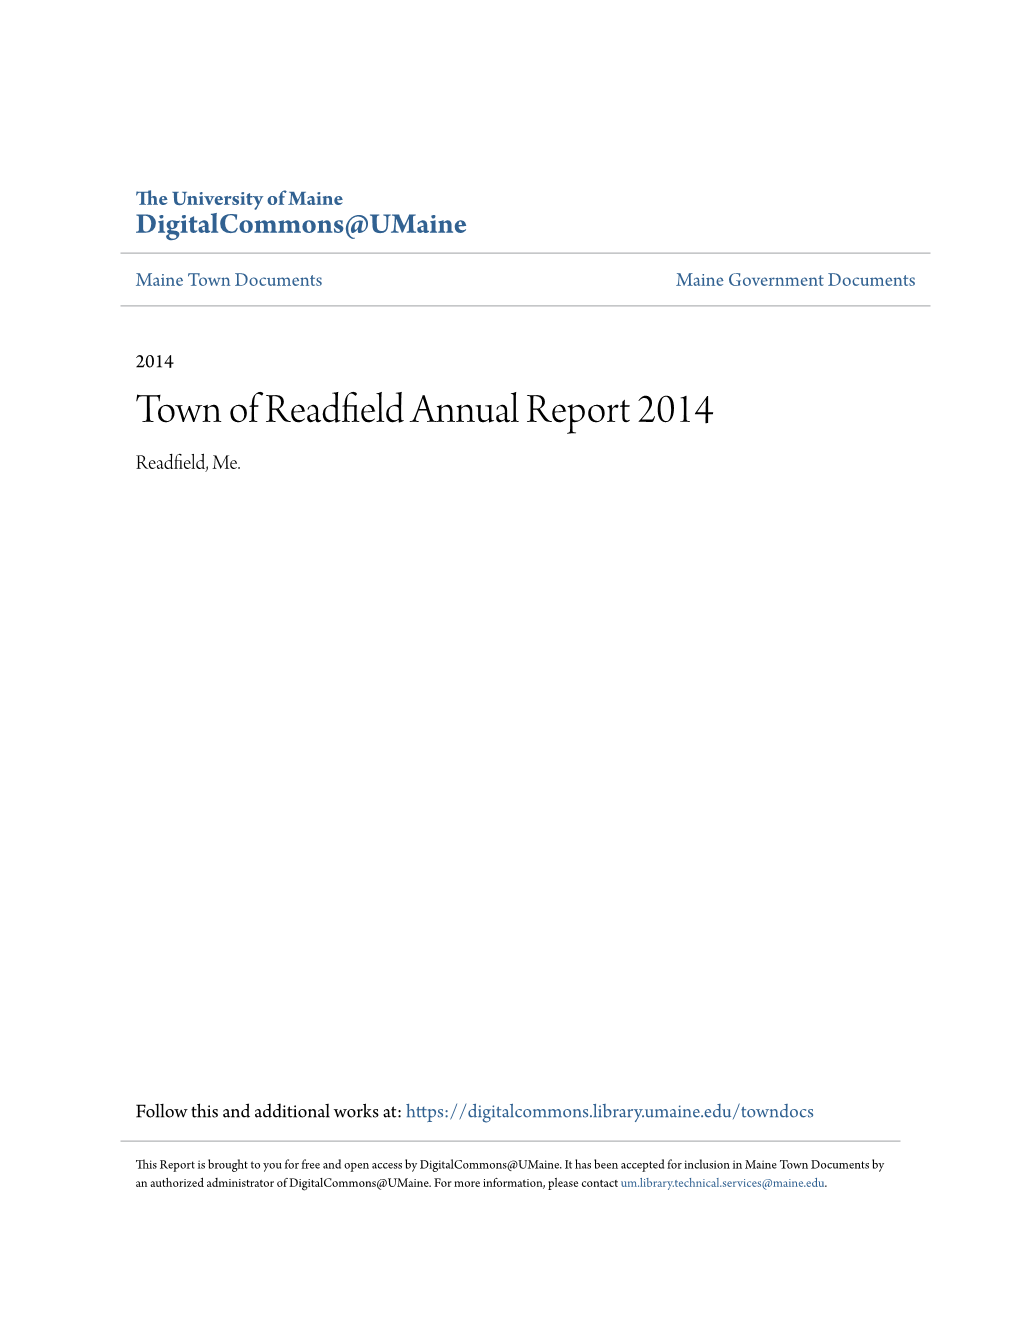 Town of Readfield Annual Report 2014 Readfield, Me